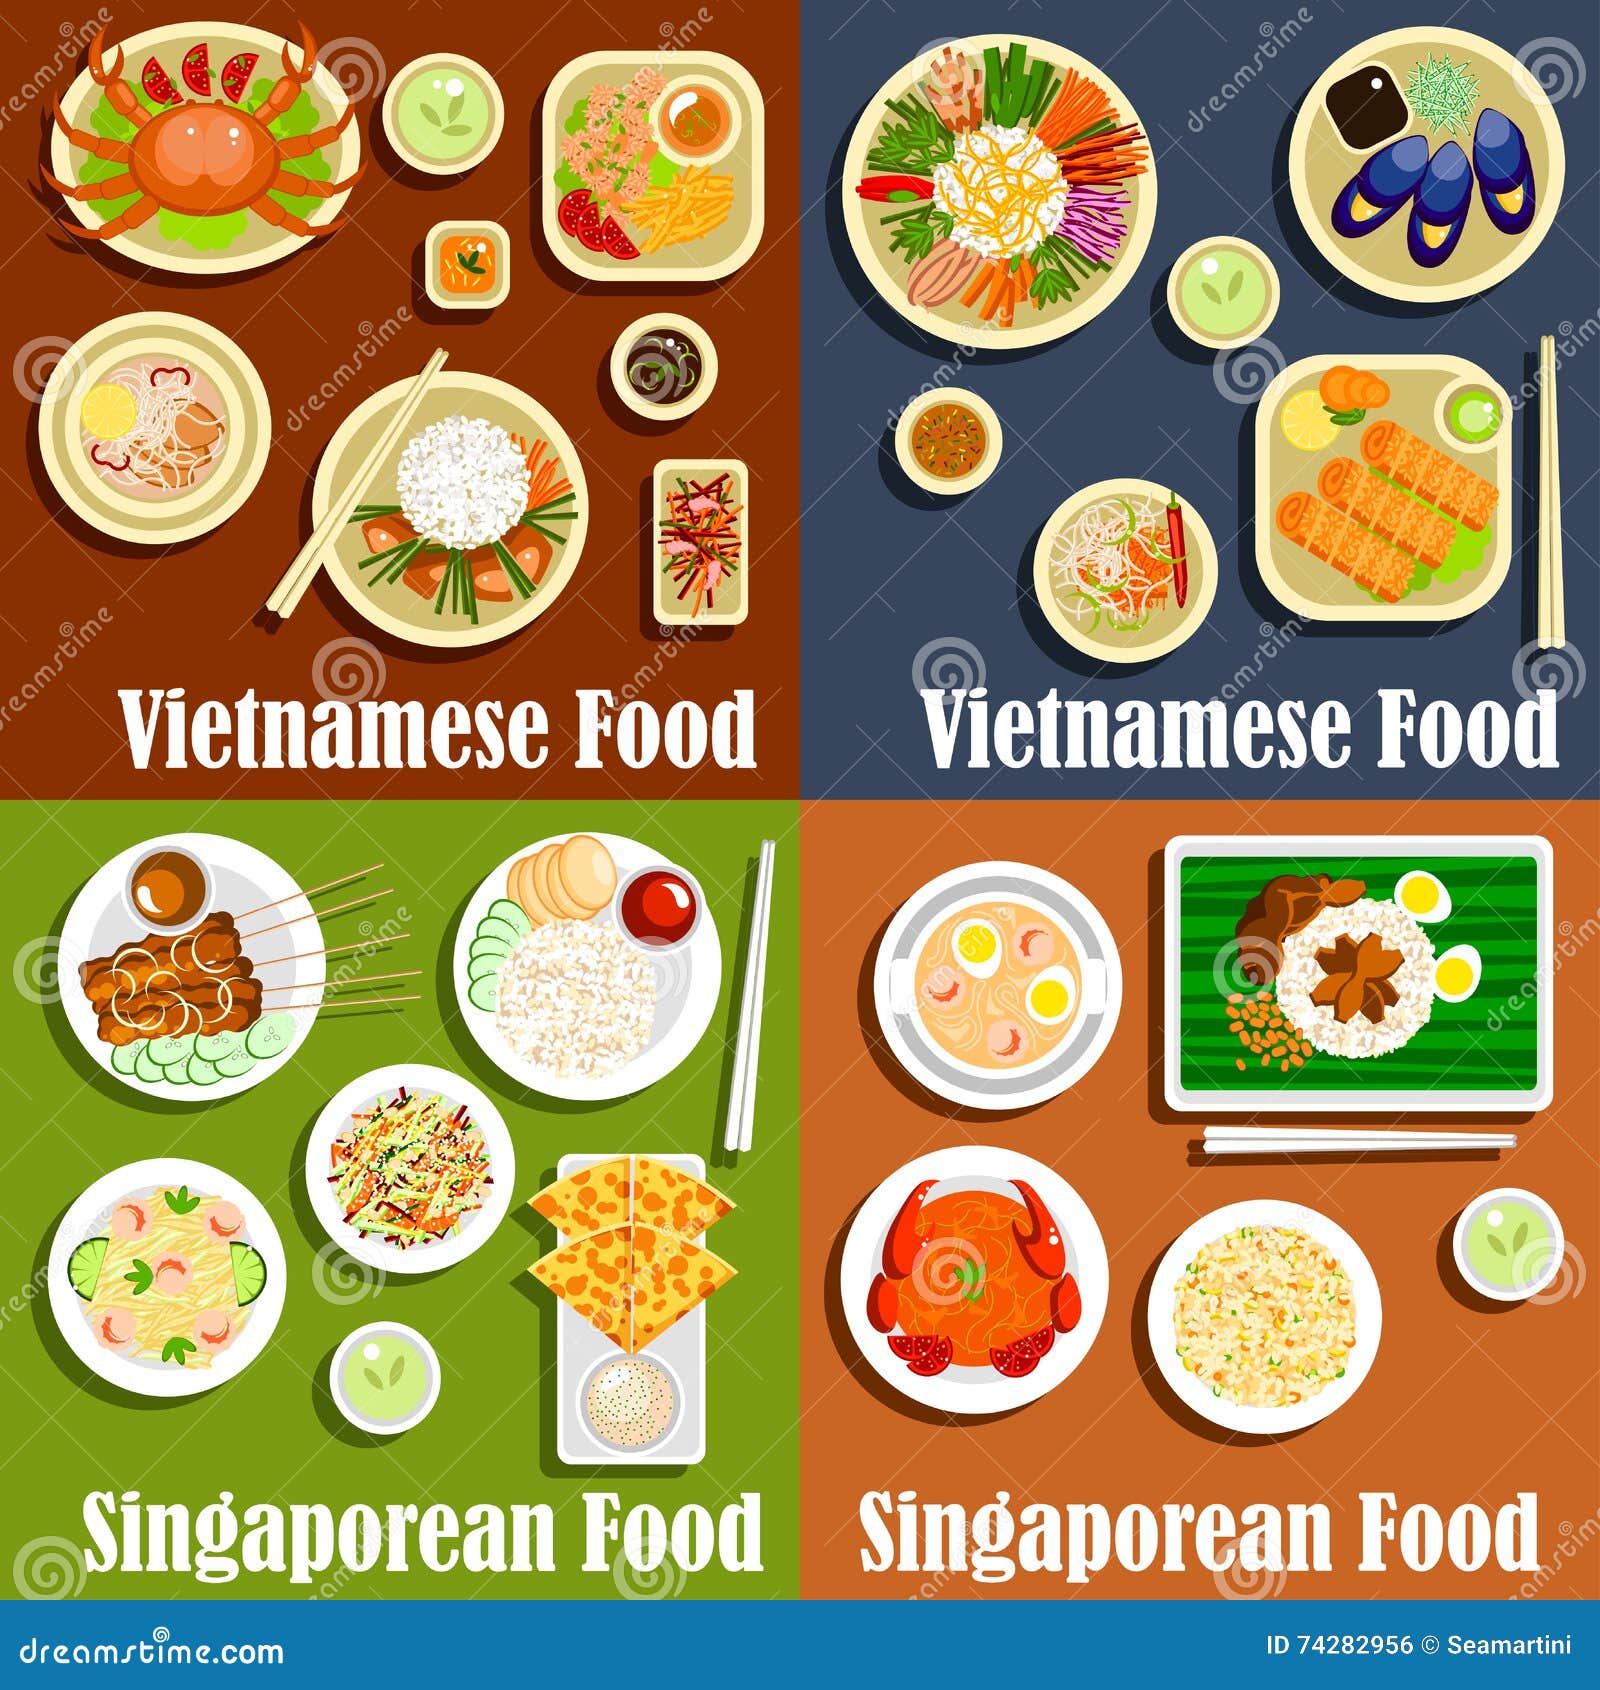 Vietnamese and Singaporean Cuisine Dishes Stock Vector - Illustration ...